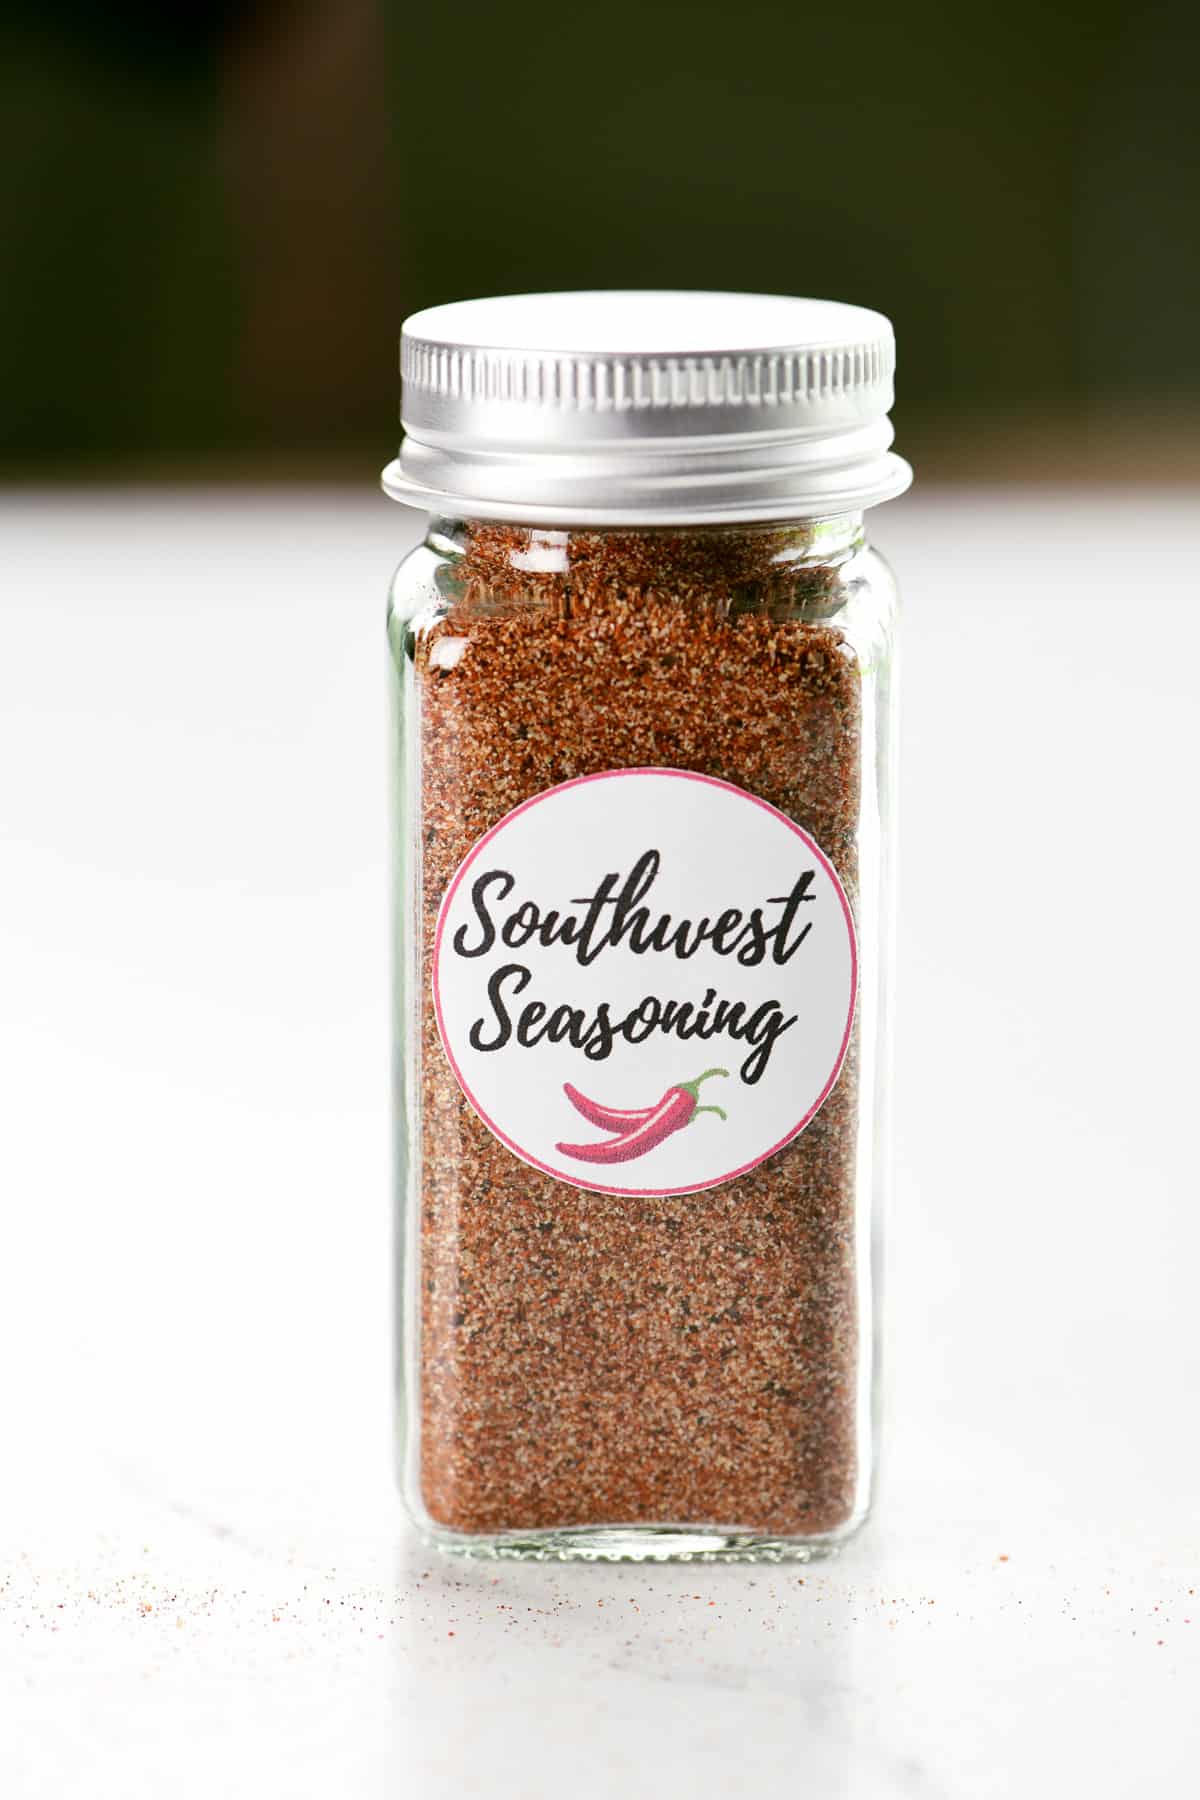 Southwest spice blend in a labeled jar.